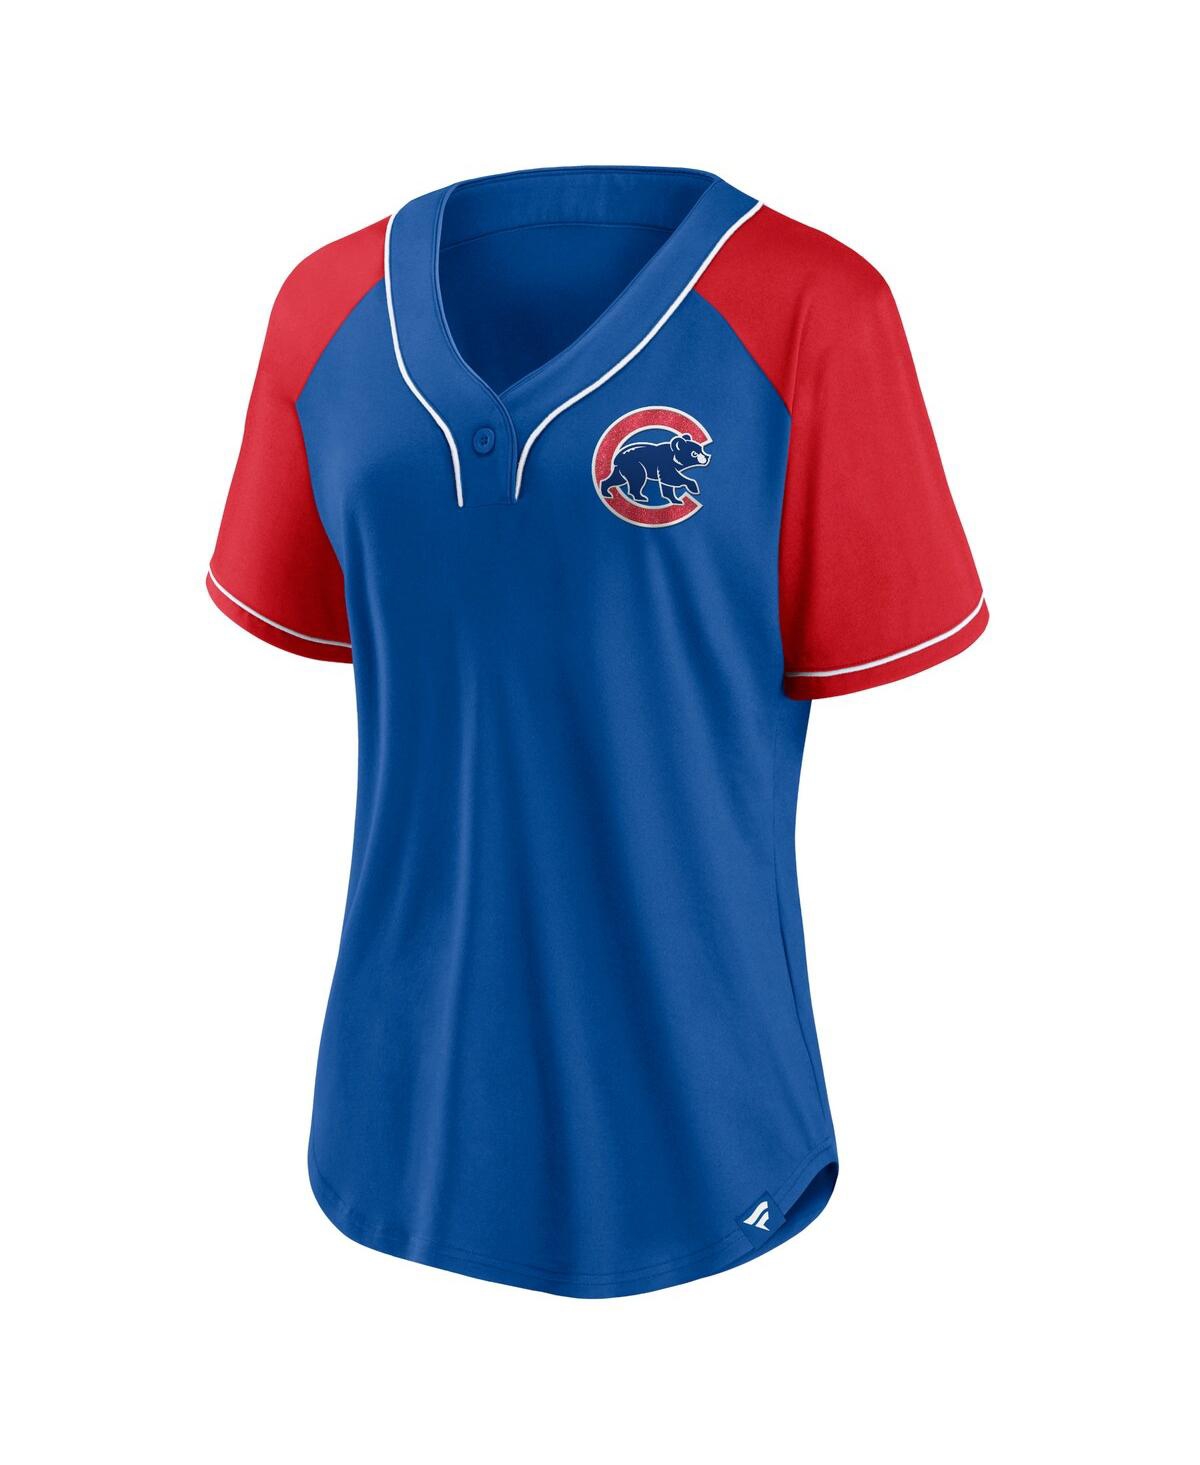 Shop Fanatics Women's  Royal Chicago Cubs Ultimate Style Raglan V-neck T-shirt